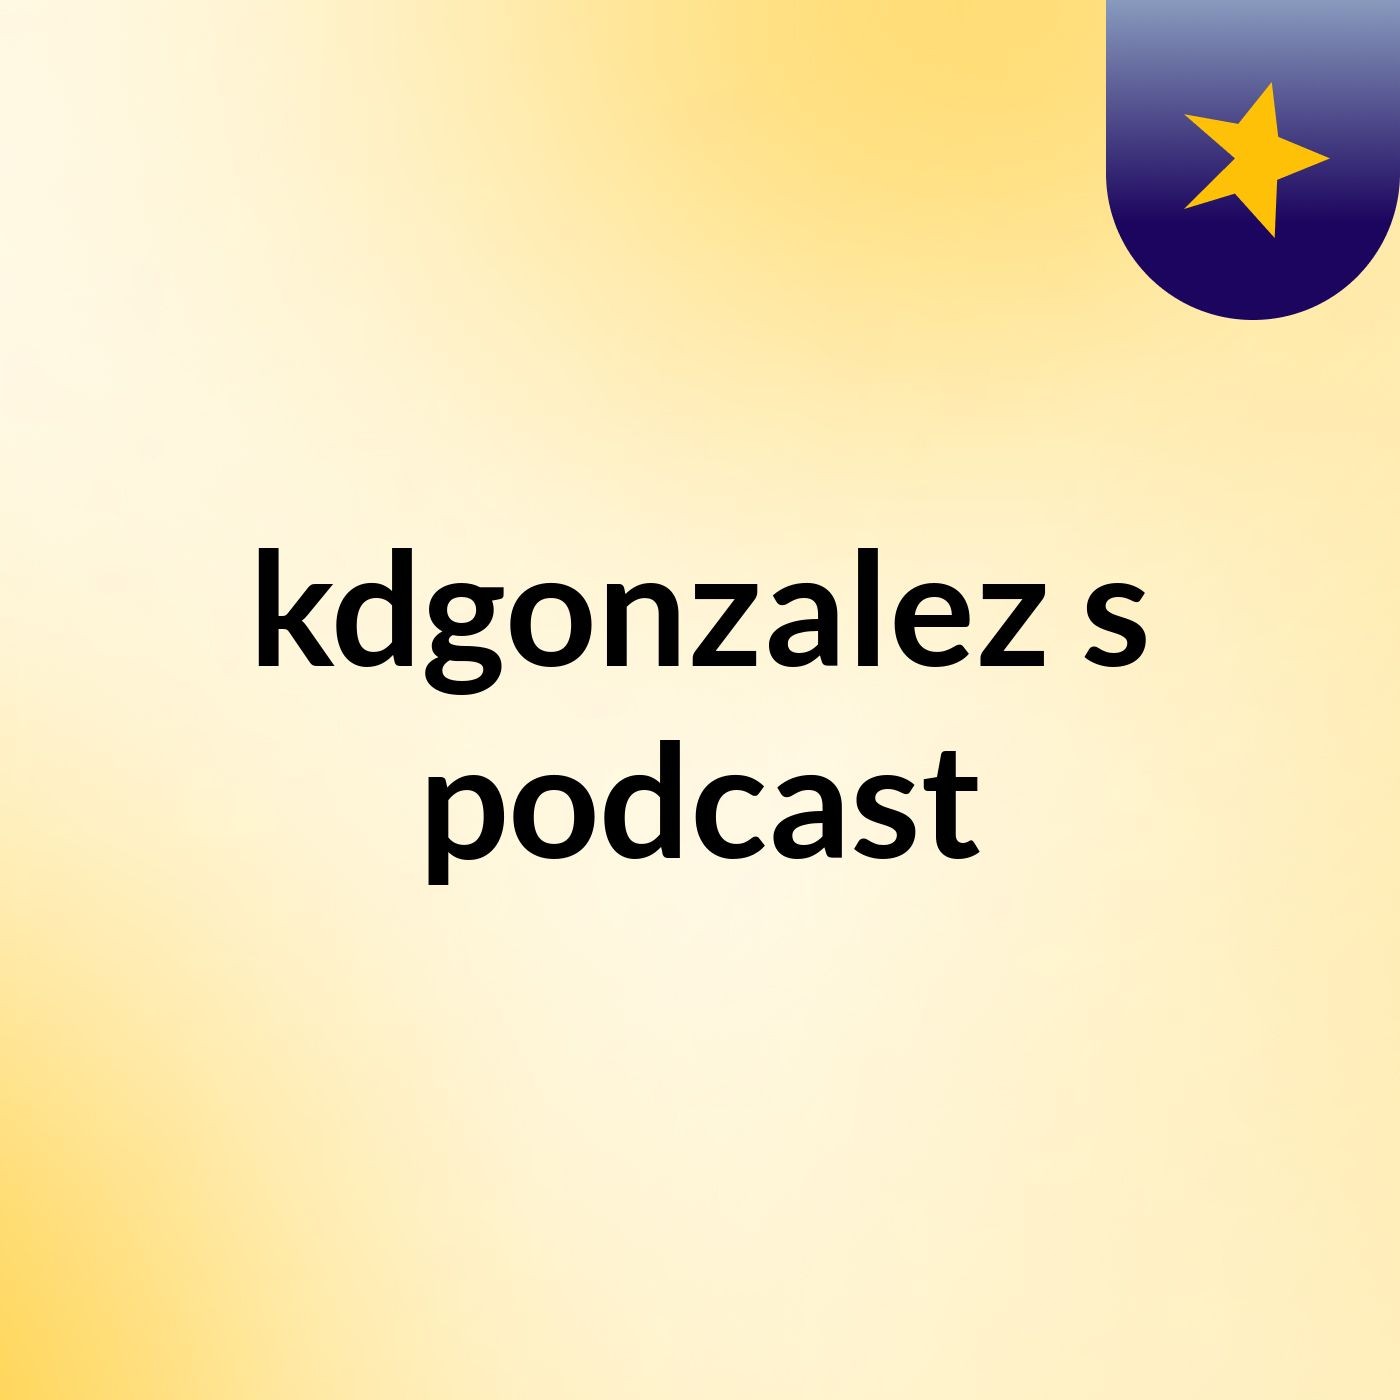 kdgonzalez's podcast